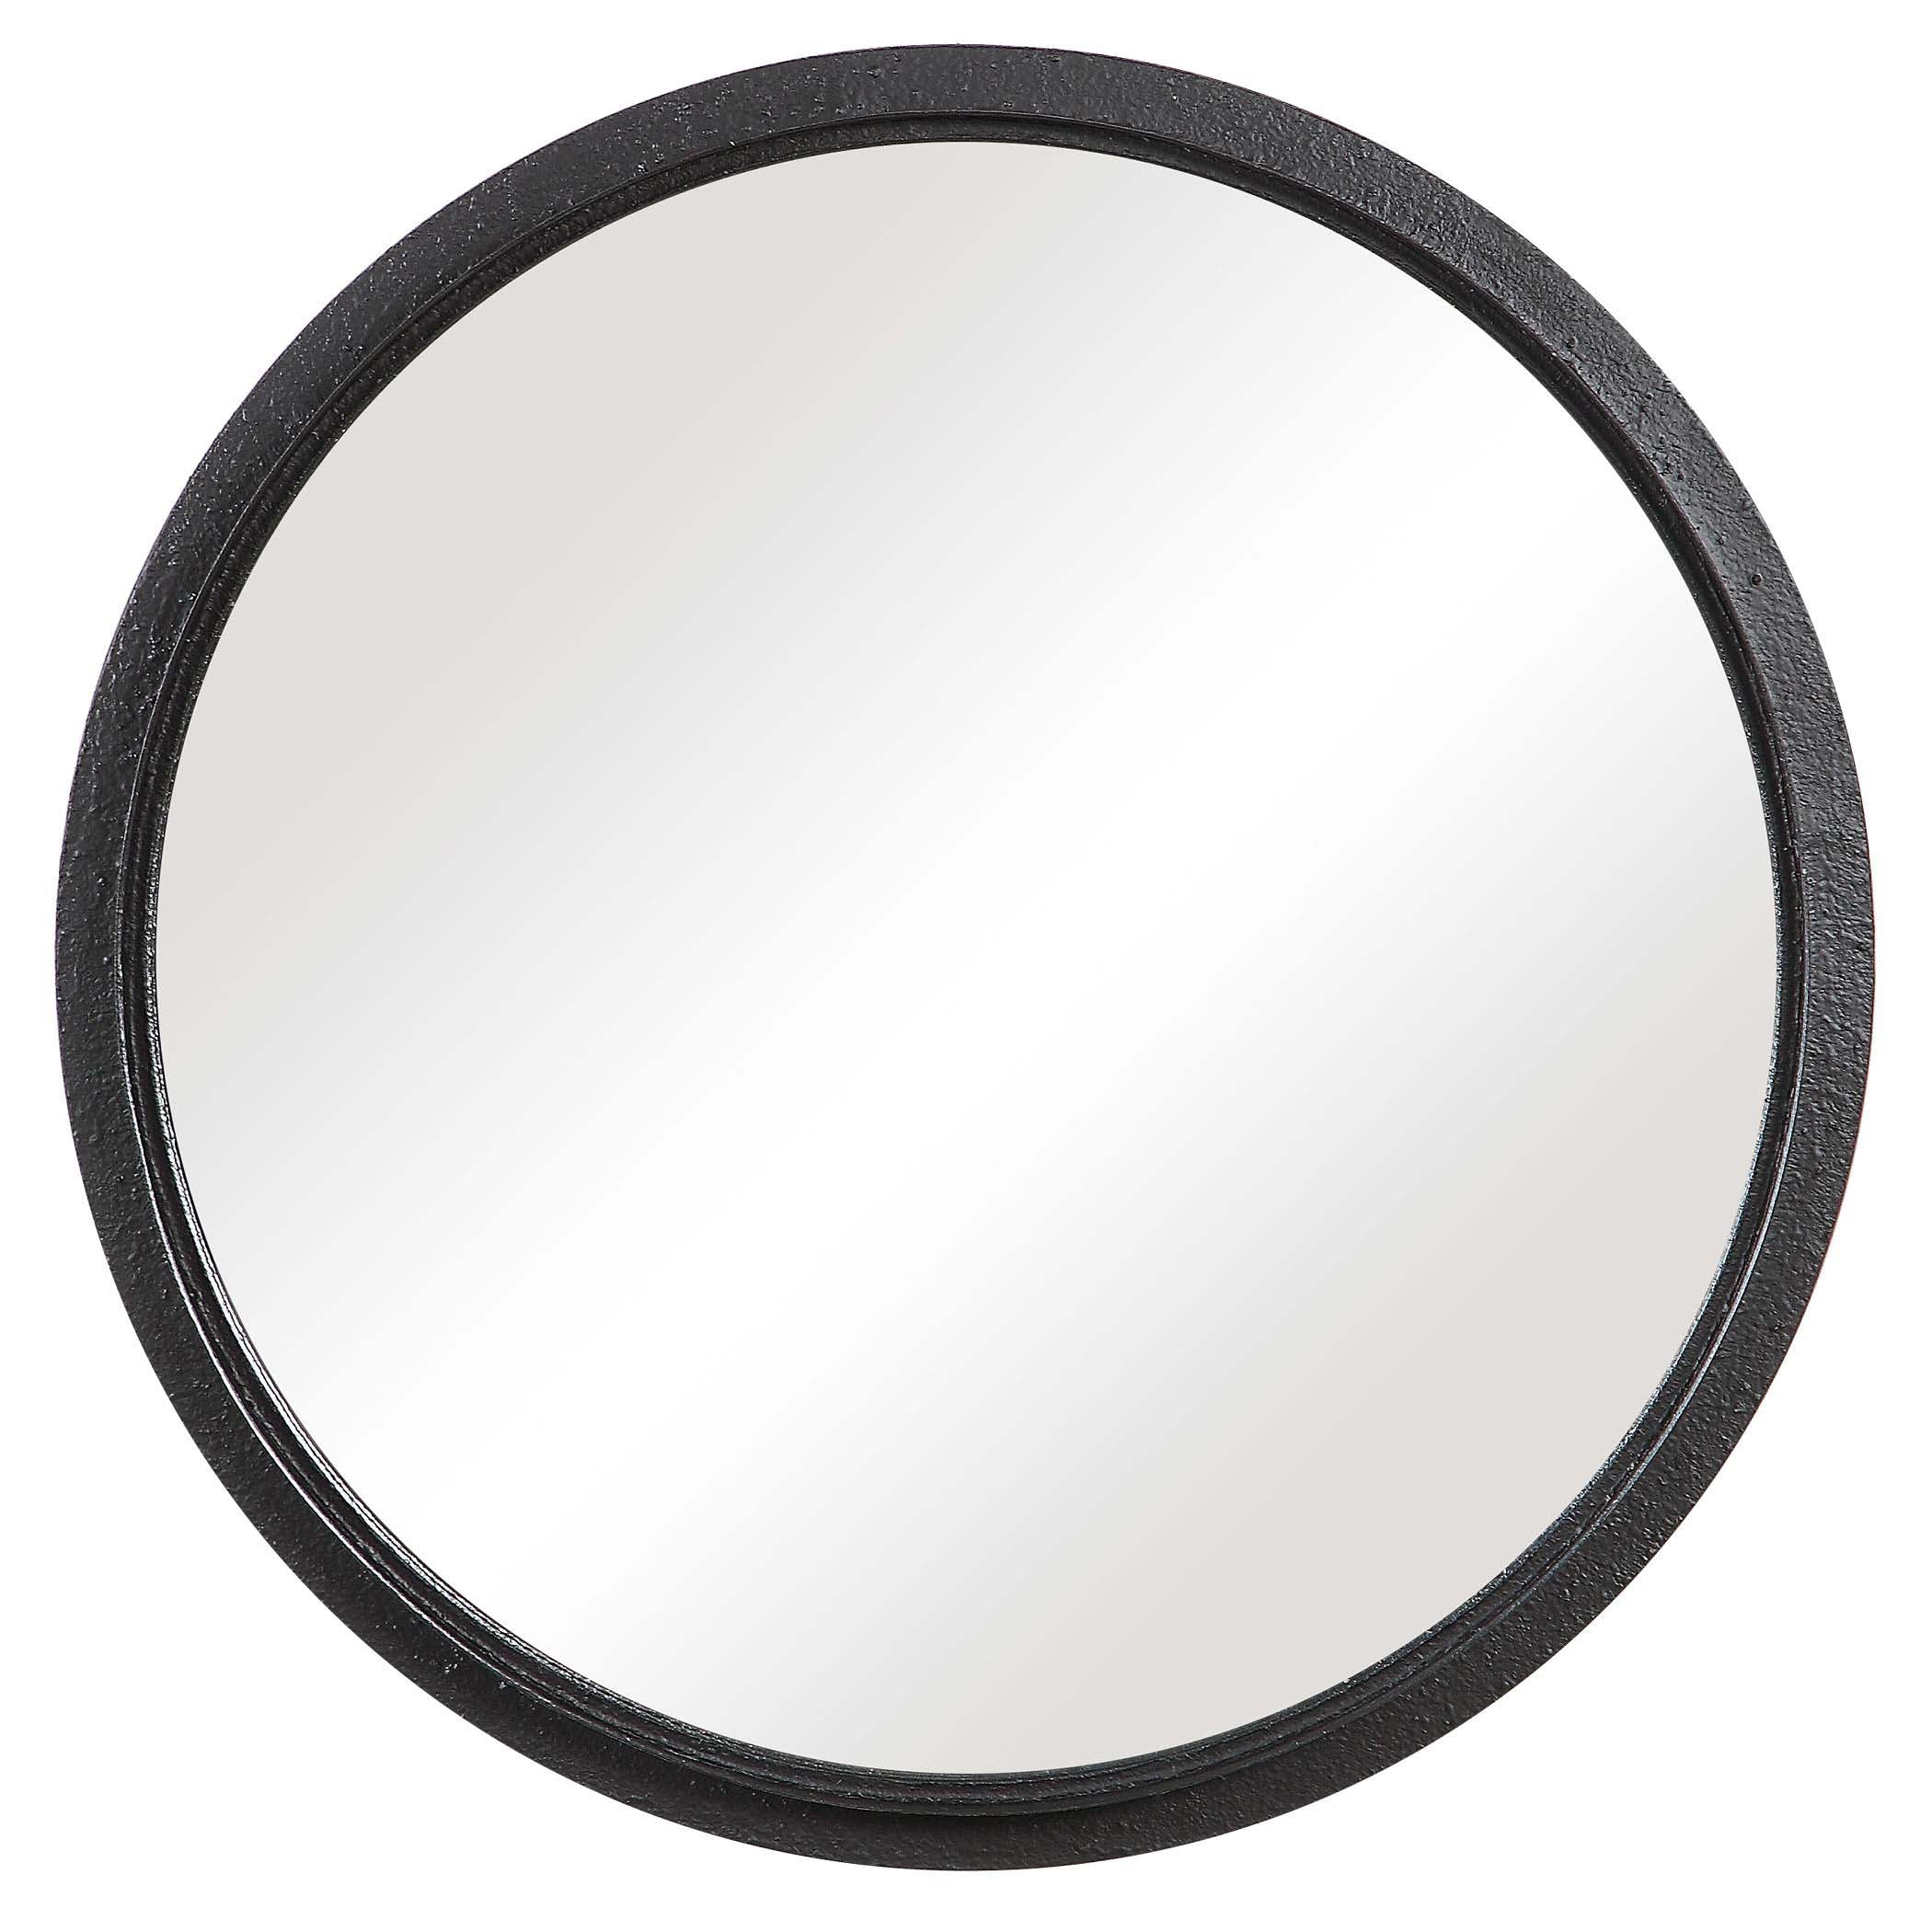 Decor Market Mirror - Black Textured Surface With A Black Satin Finish